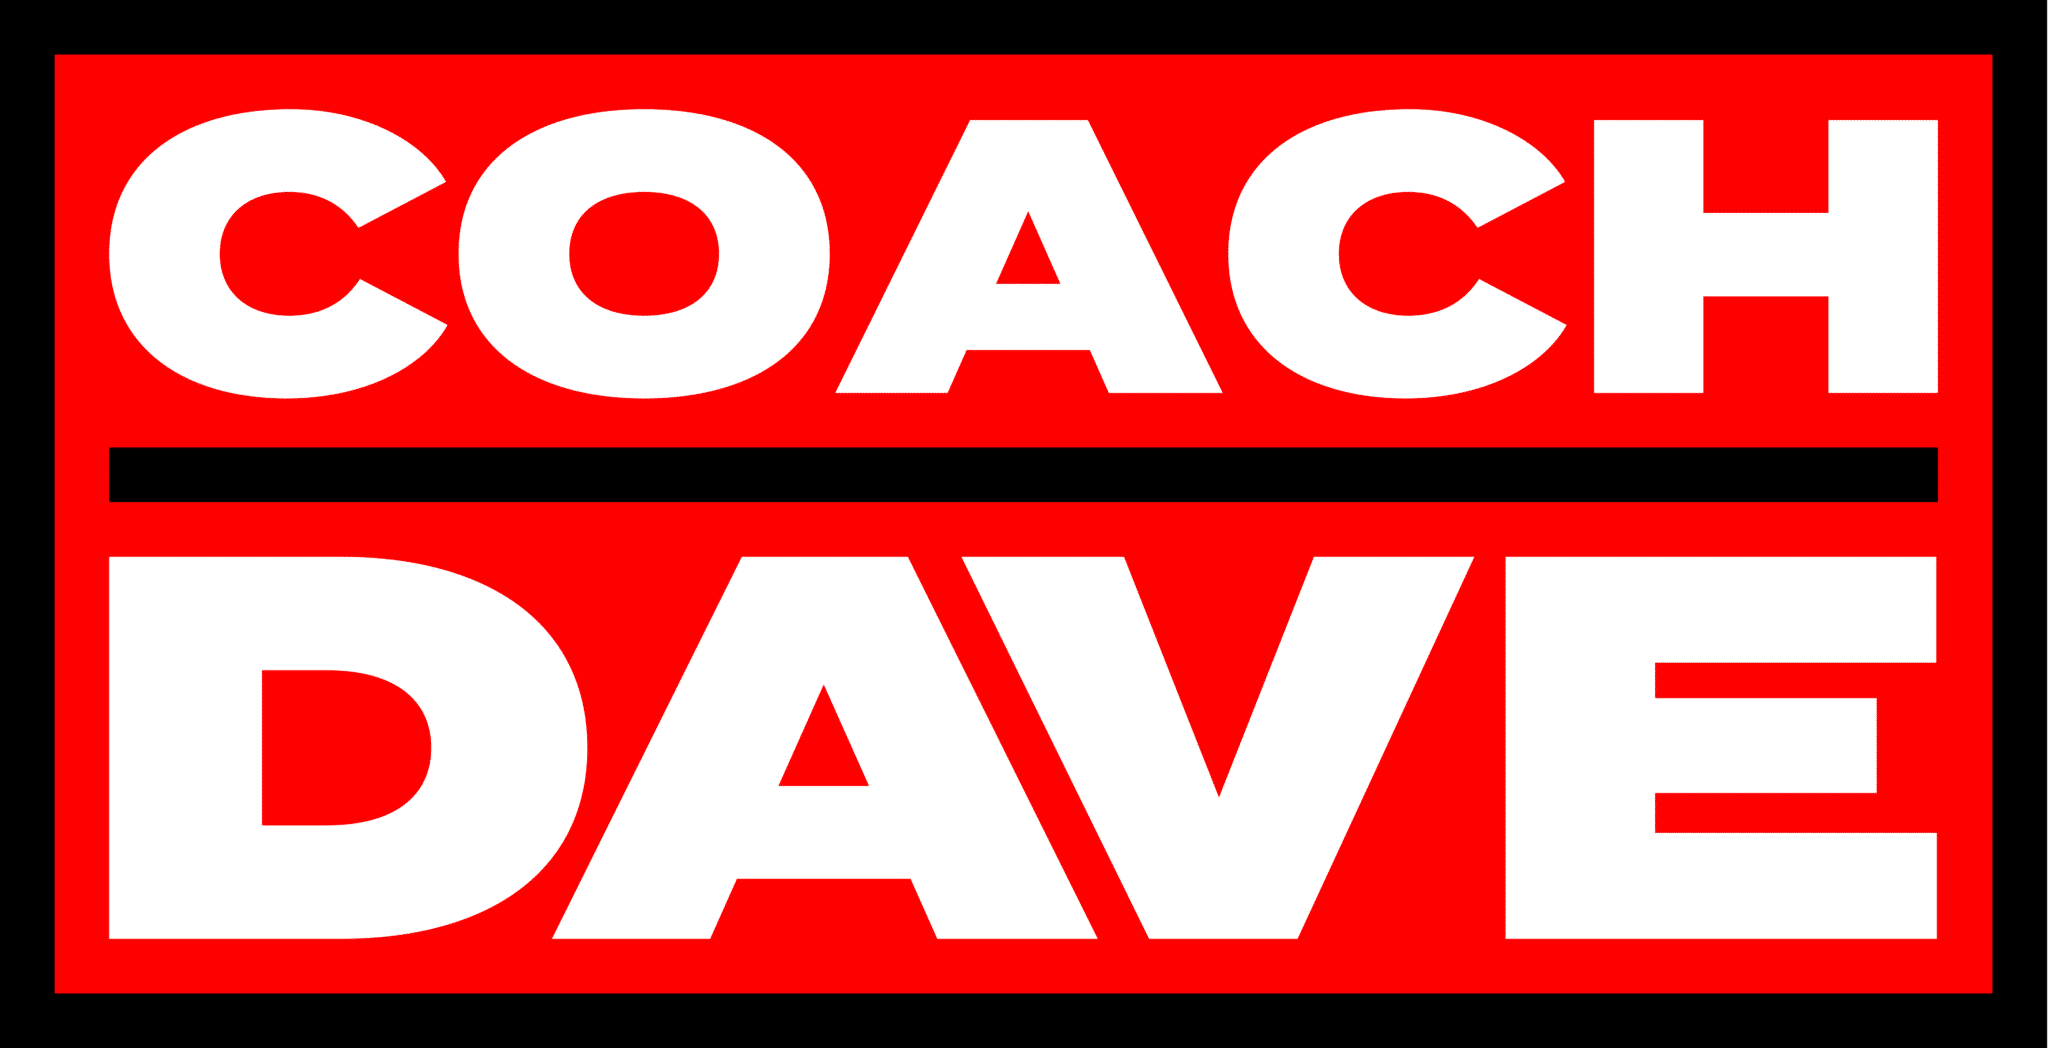 Coach dave logo on a black background.